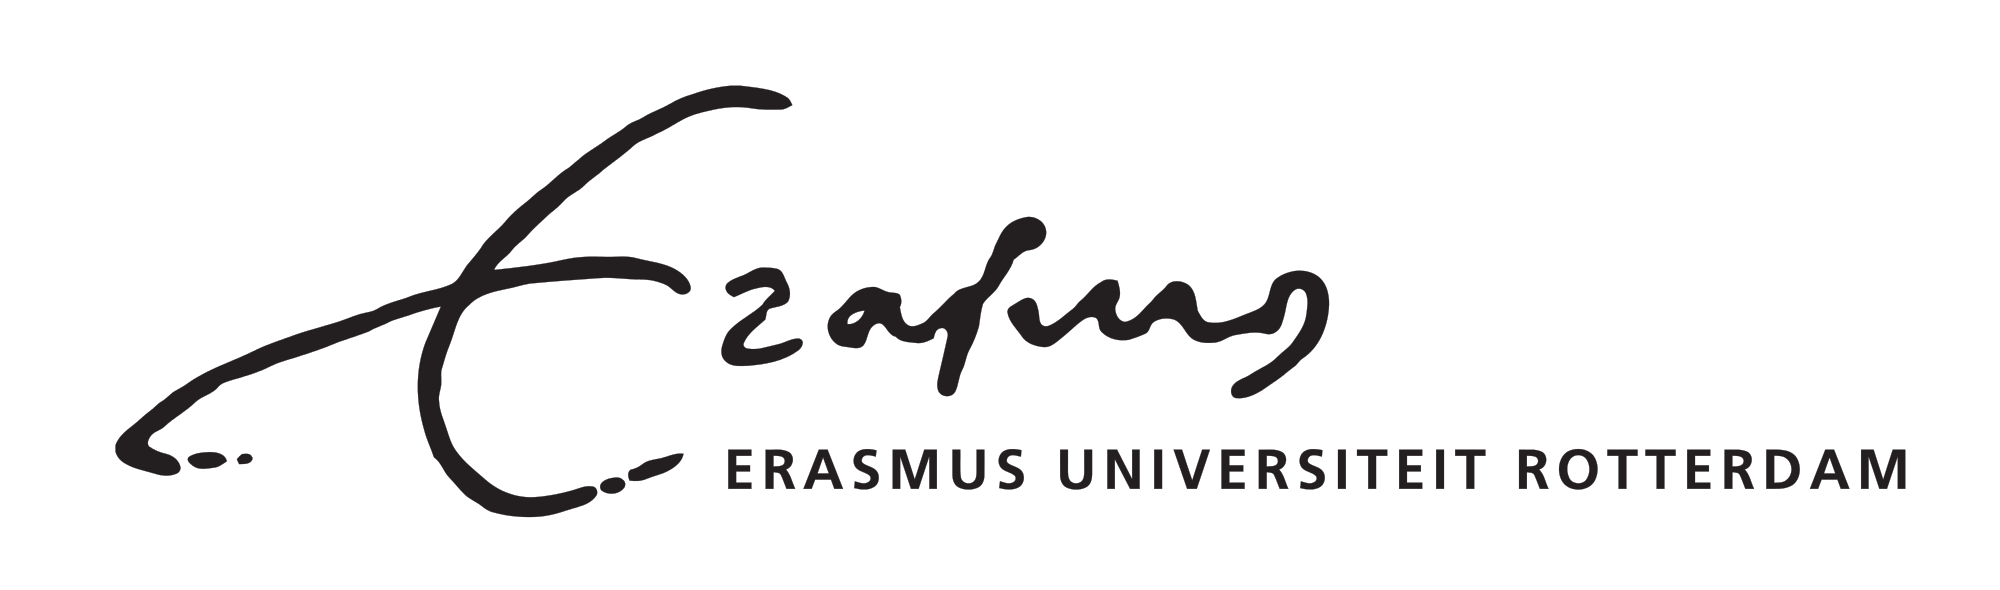 Logo_Erasmus_Universiteit_Rotterdam.svg